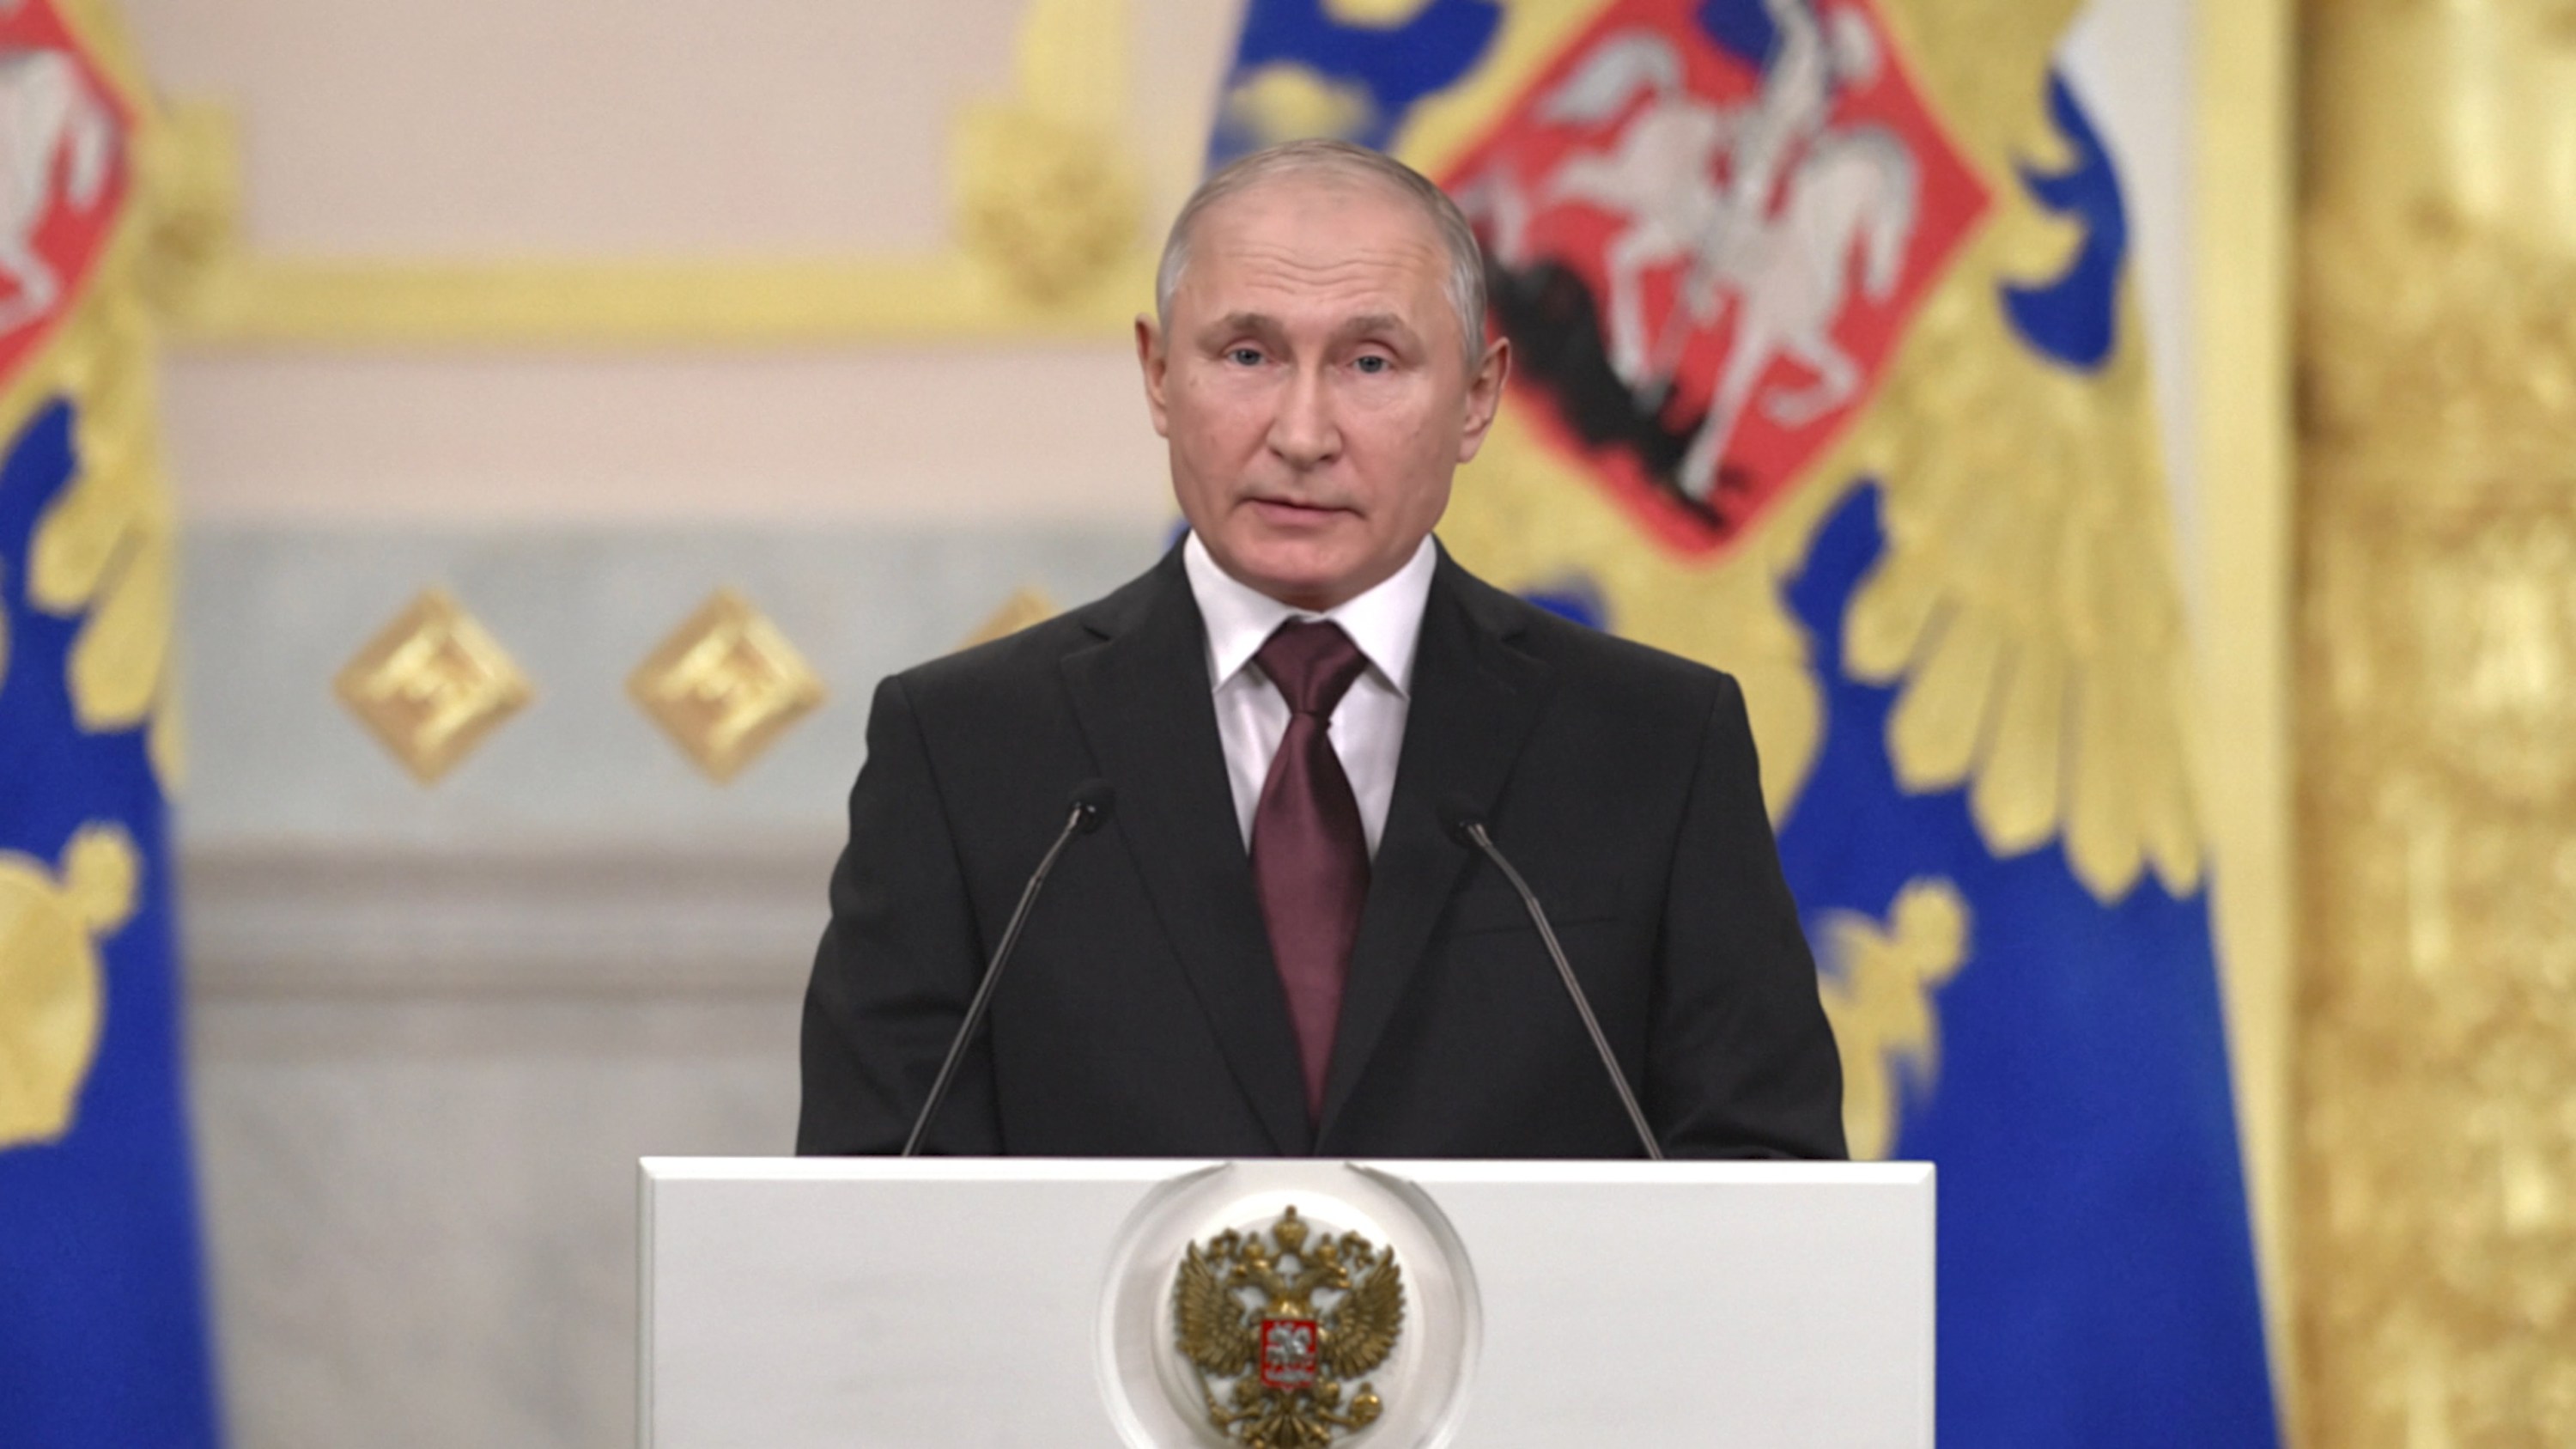 A deepfake of Putin standing at a podium.